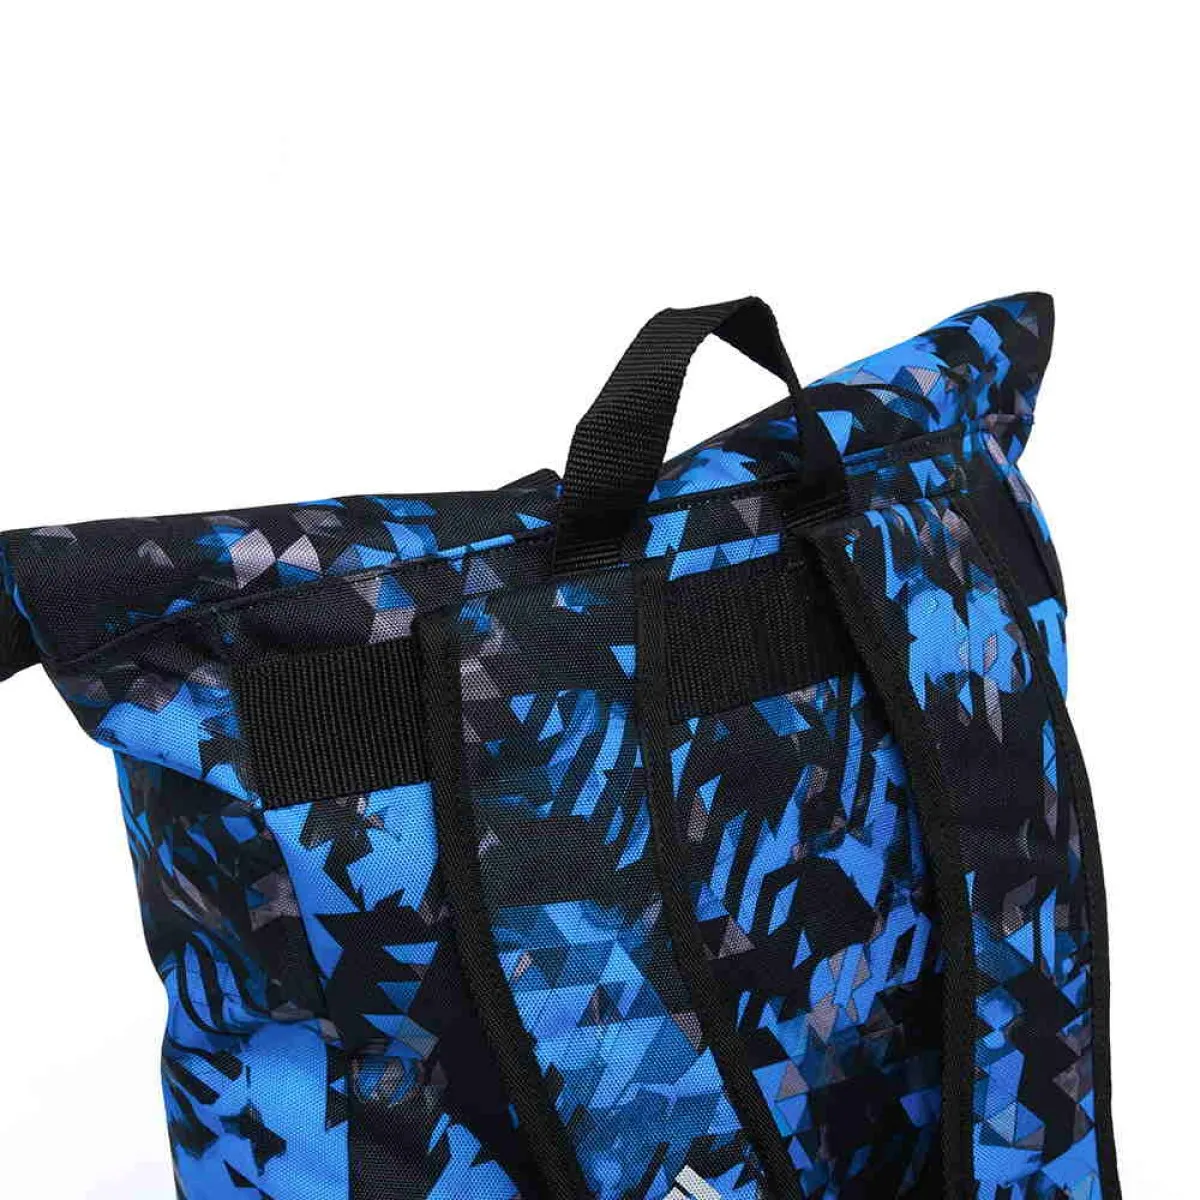 adidas Seesack - Sac à dos de sport camouflage bleu, taille S